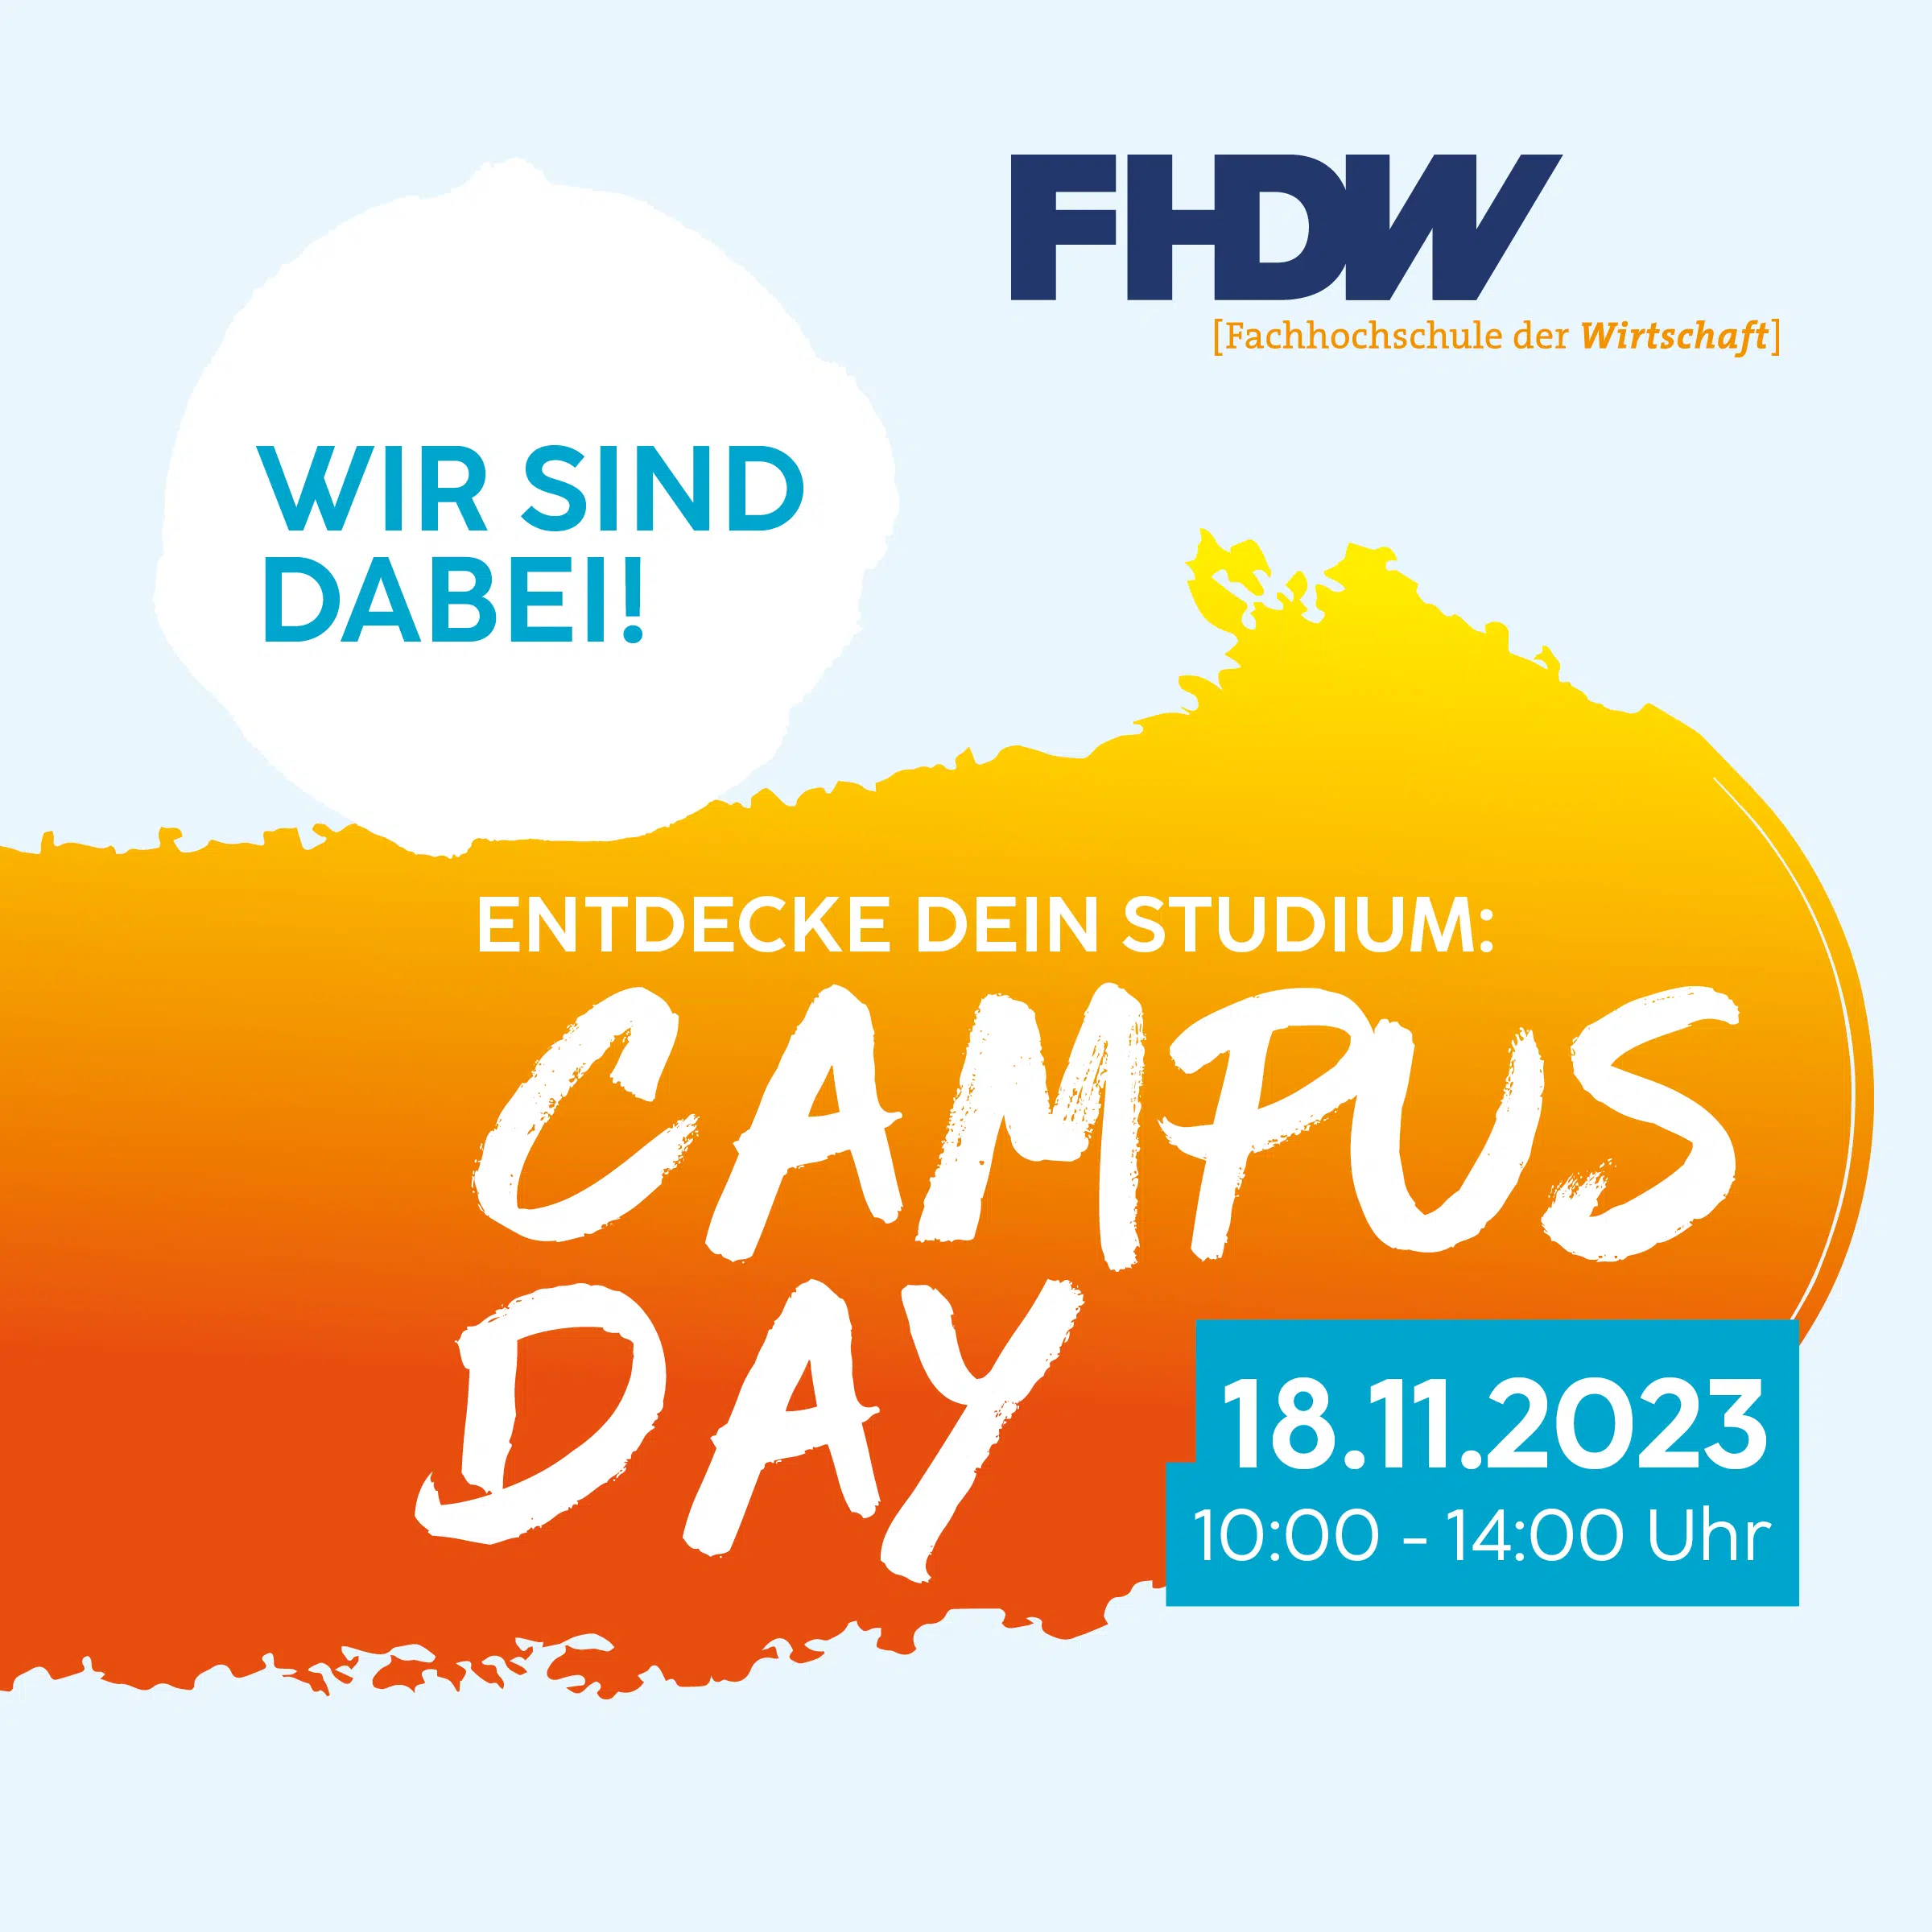 FHDW Campus Days November 2023